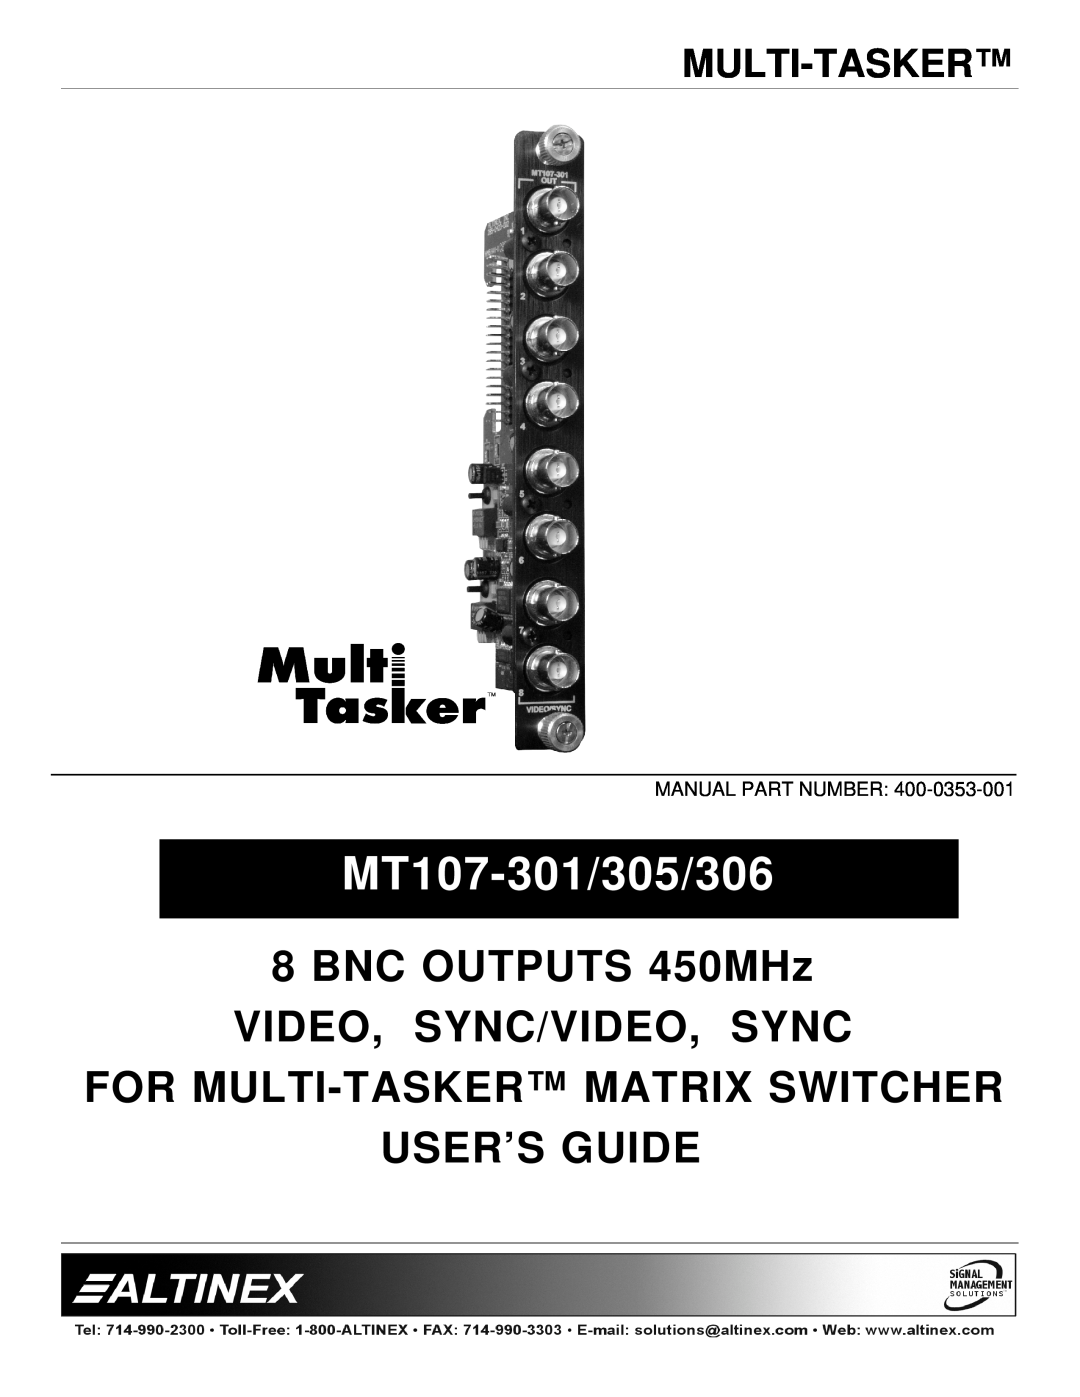 Altinex MT107-305, MT107-306 manual Multi-Tasker, MT107-301/305/306, BNC OUTPUTS 450MHz VIDEO, SYNC/VIDEO, SYNC 